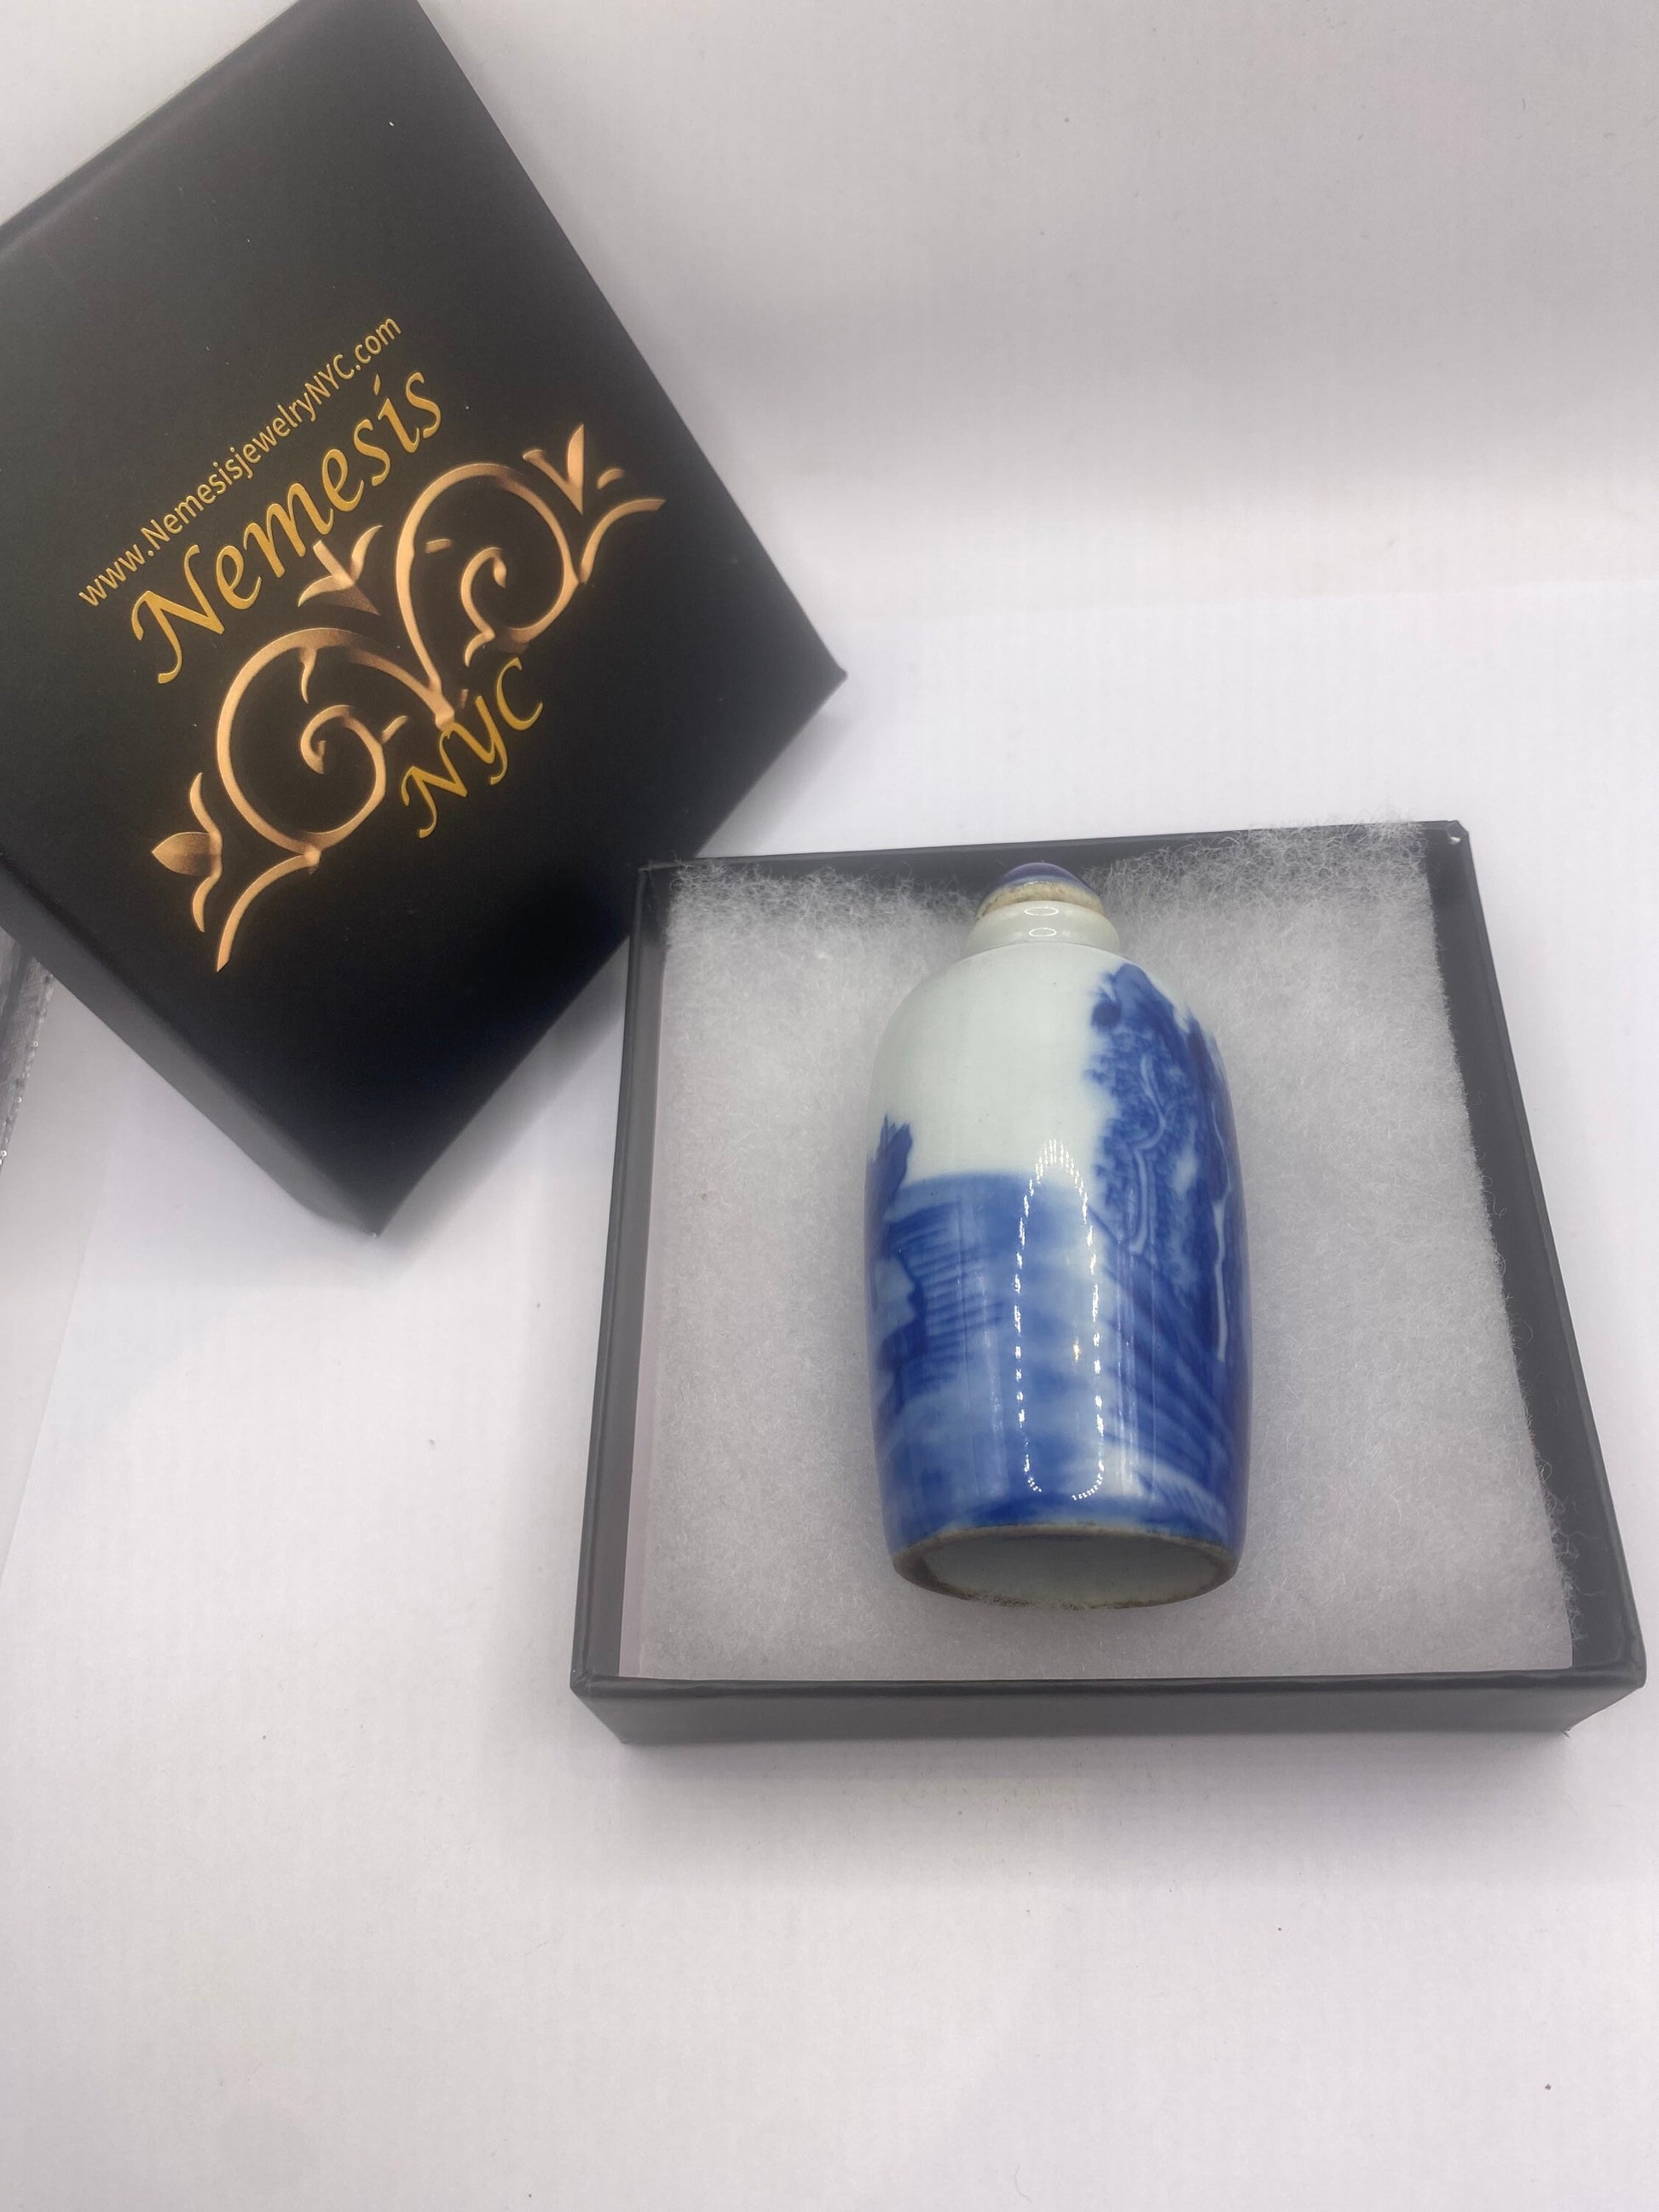 Vintage Dragon Bottle Snuff Perfume Flask Hand Painted Porcelain